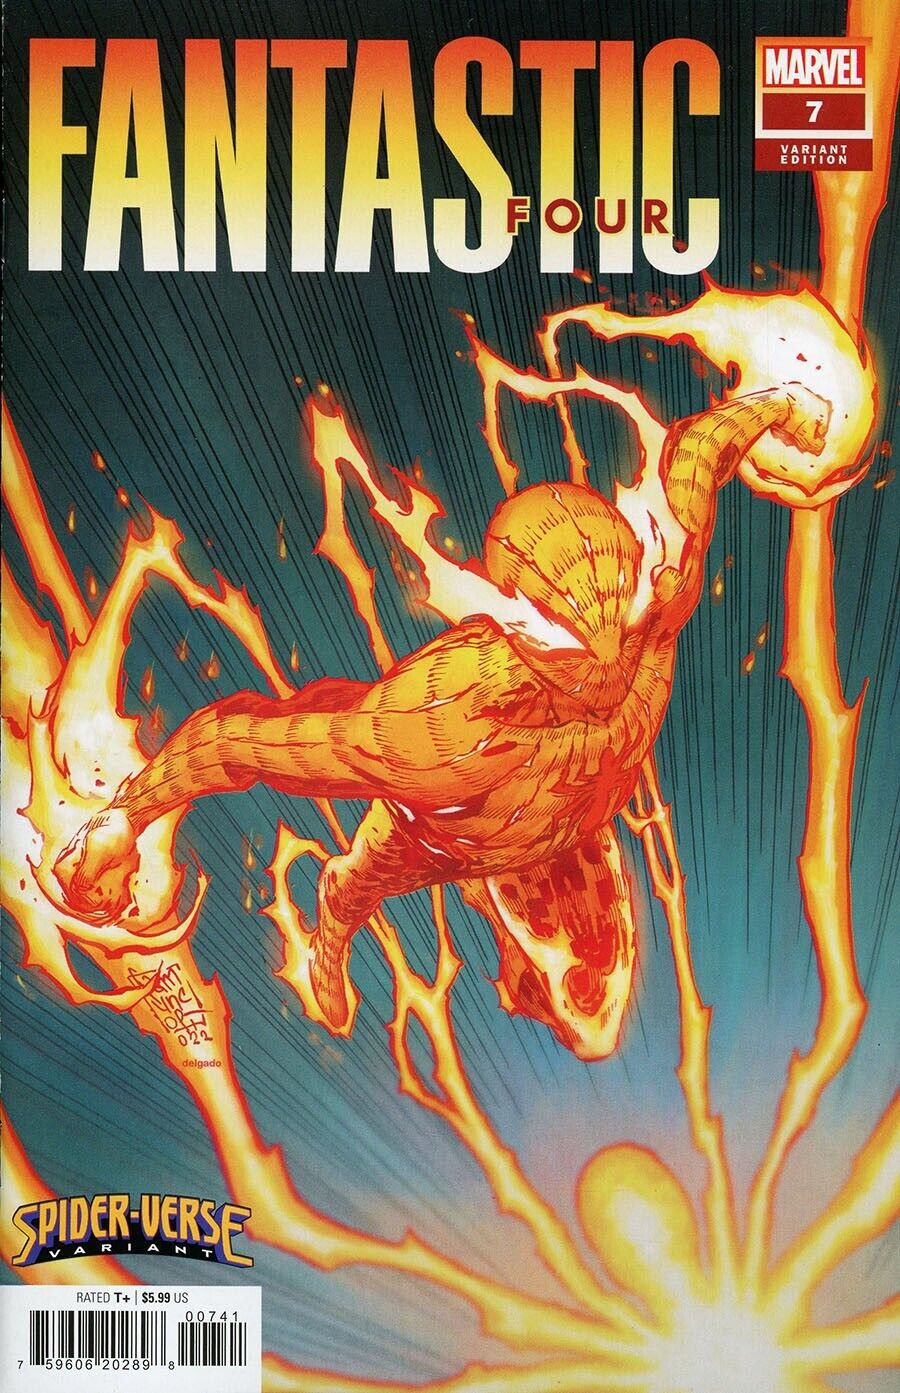 Fantastic Four Vol 7 #7 Cover B Spider-Verse Guiseppe Camuncoli Marvel 00741